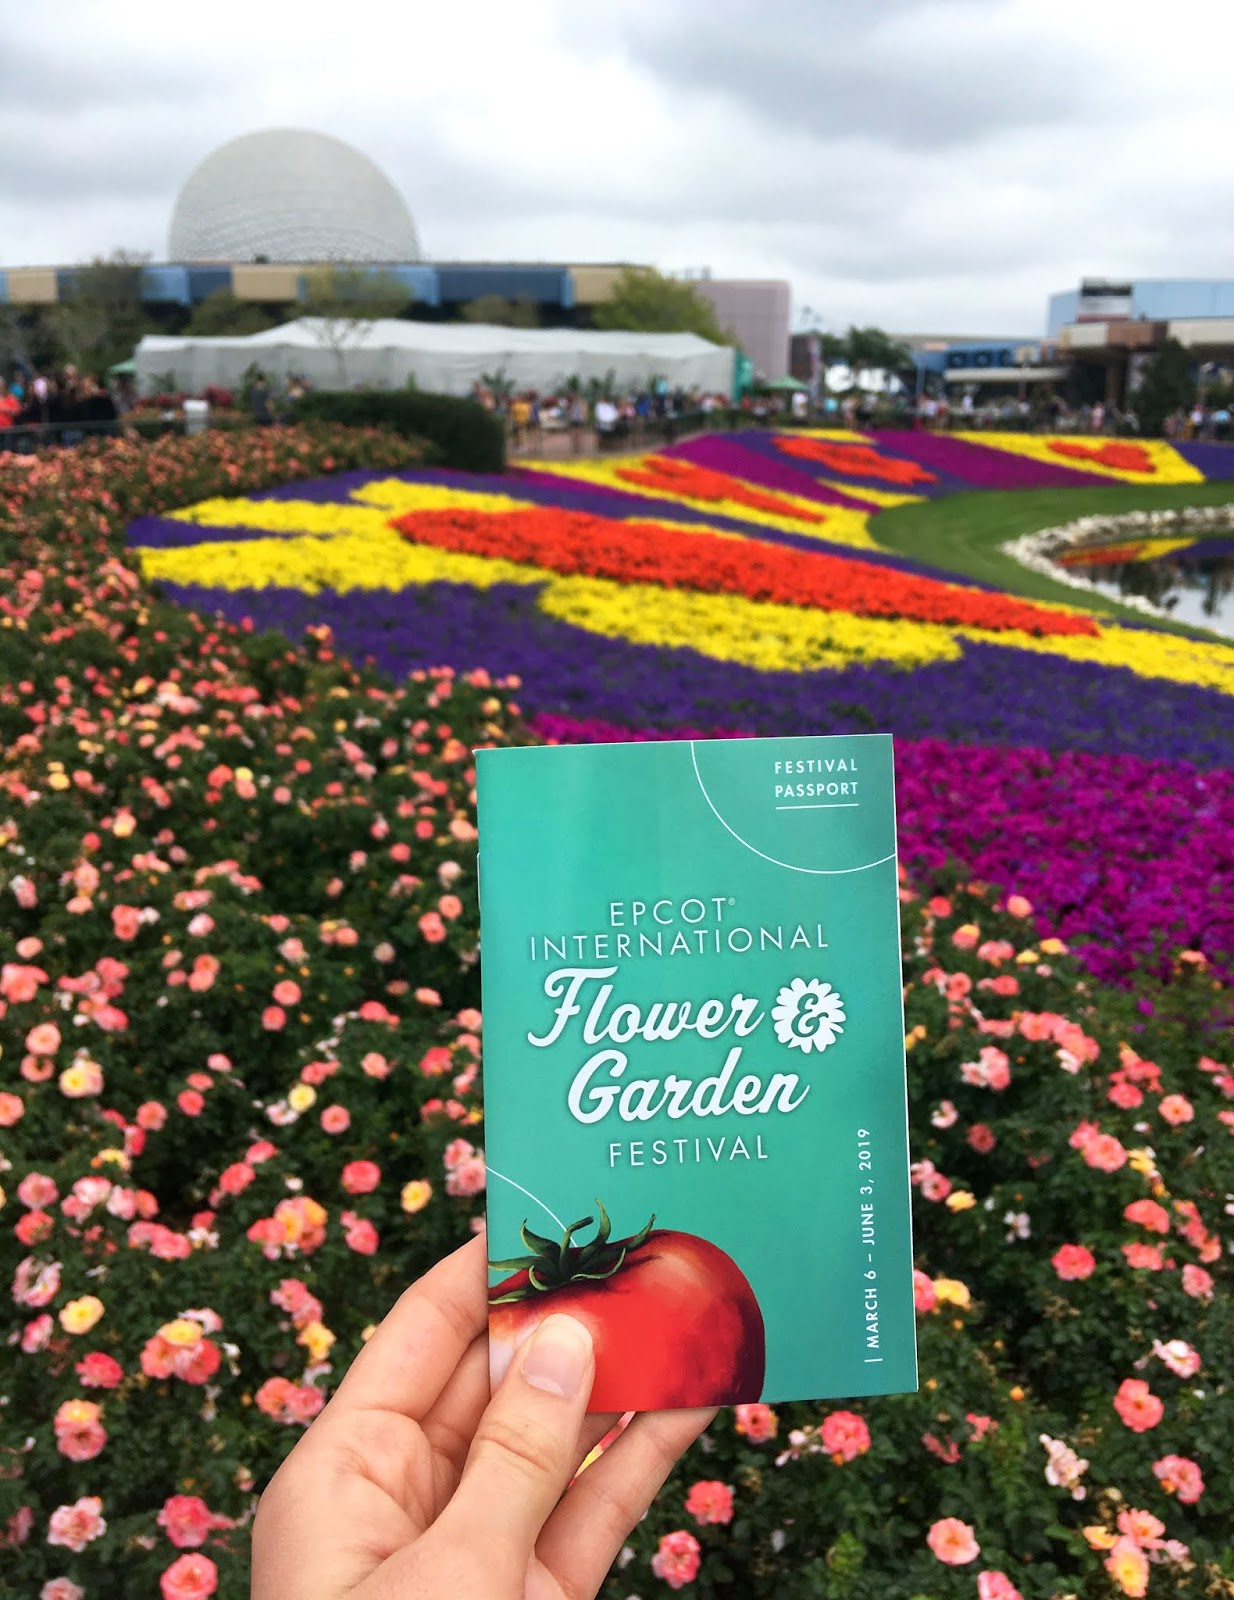 2019 Epcot International Flower and Garden Festival guide